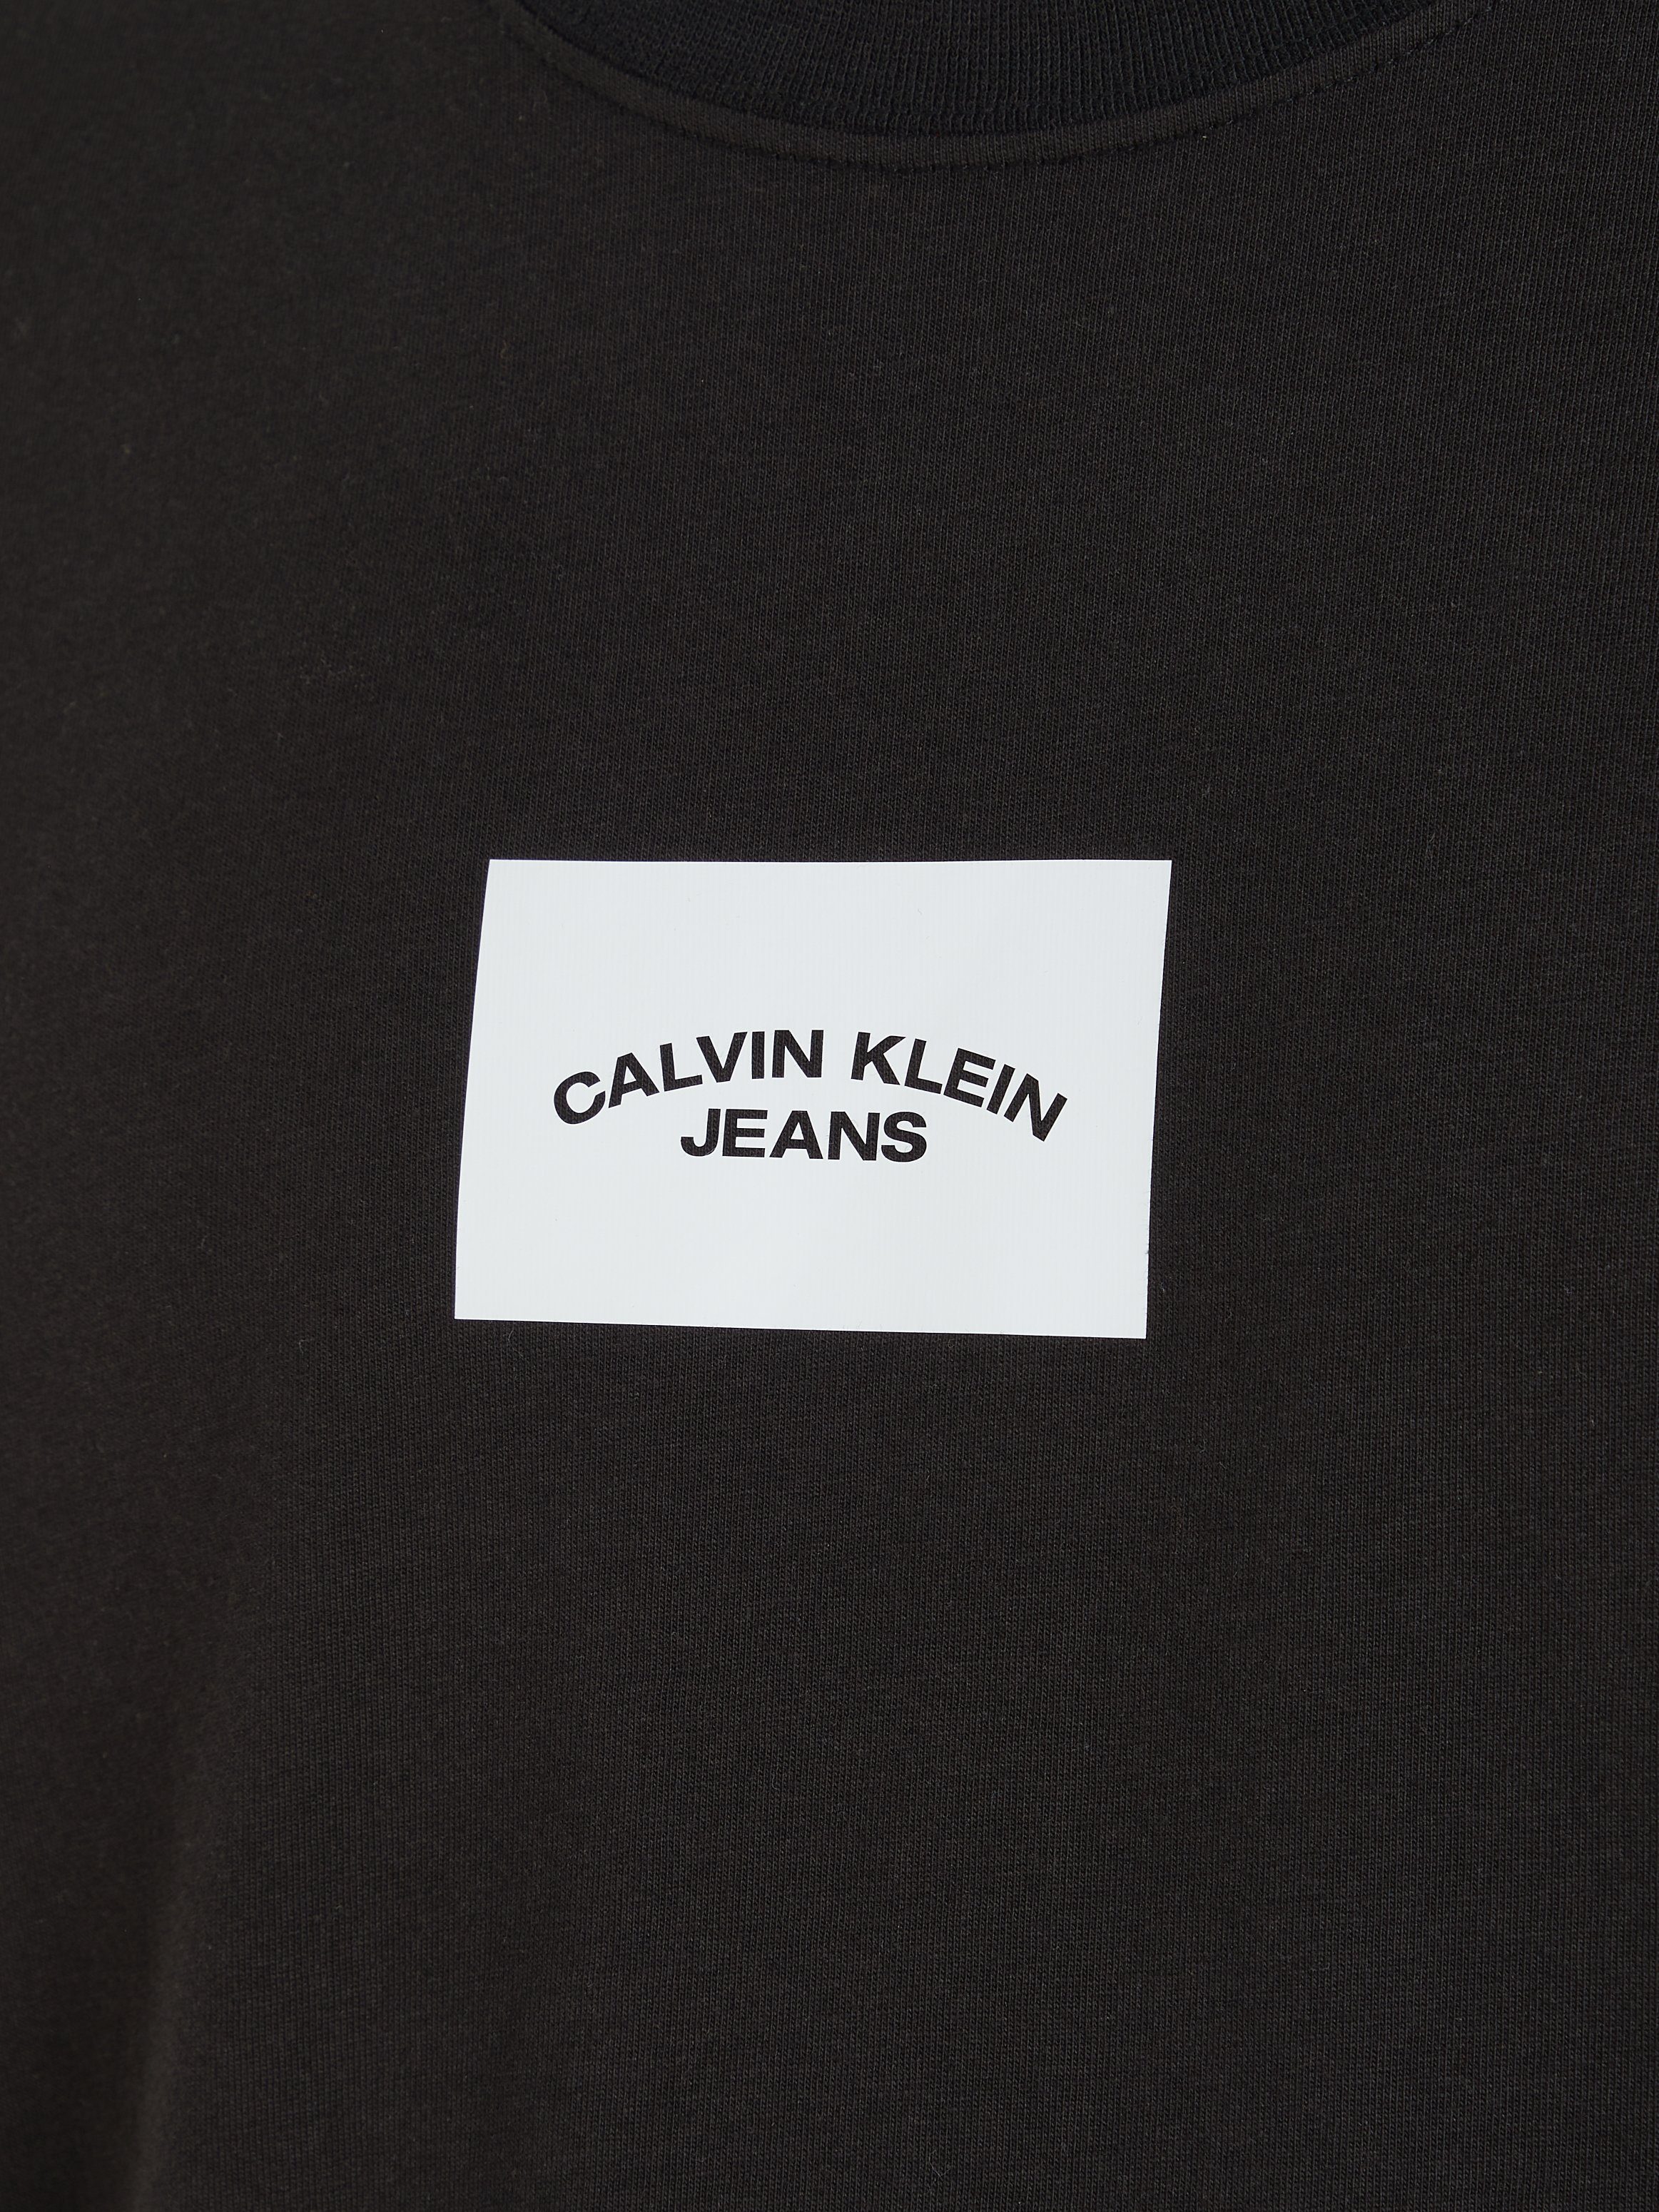 Klein SMALL CENTER Ck BOX Calvin T-Shirt Black Jeans TEE